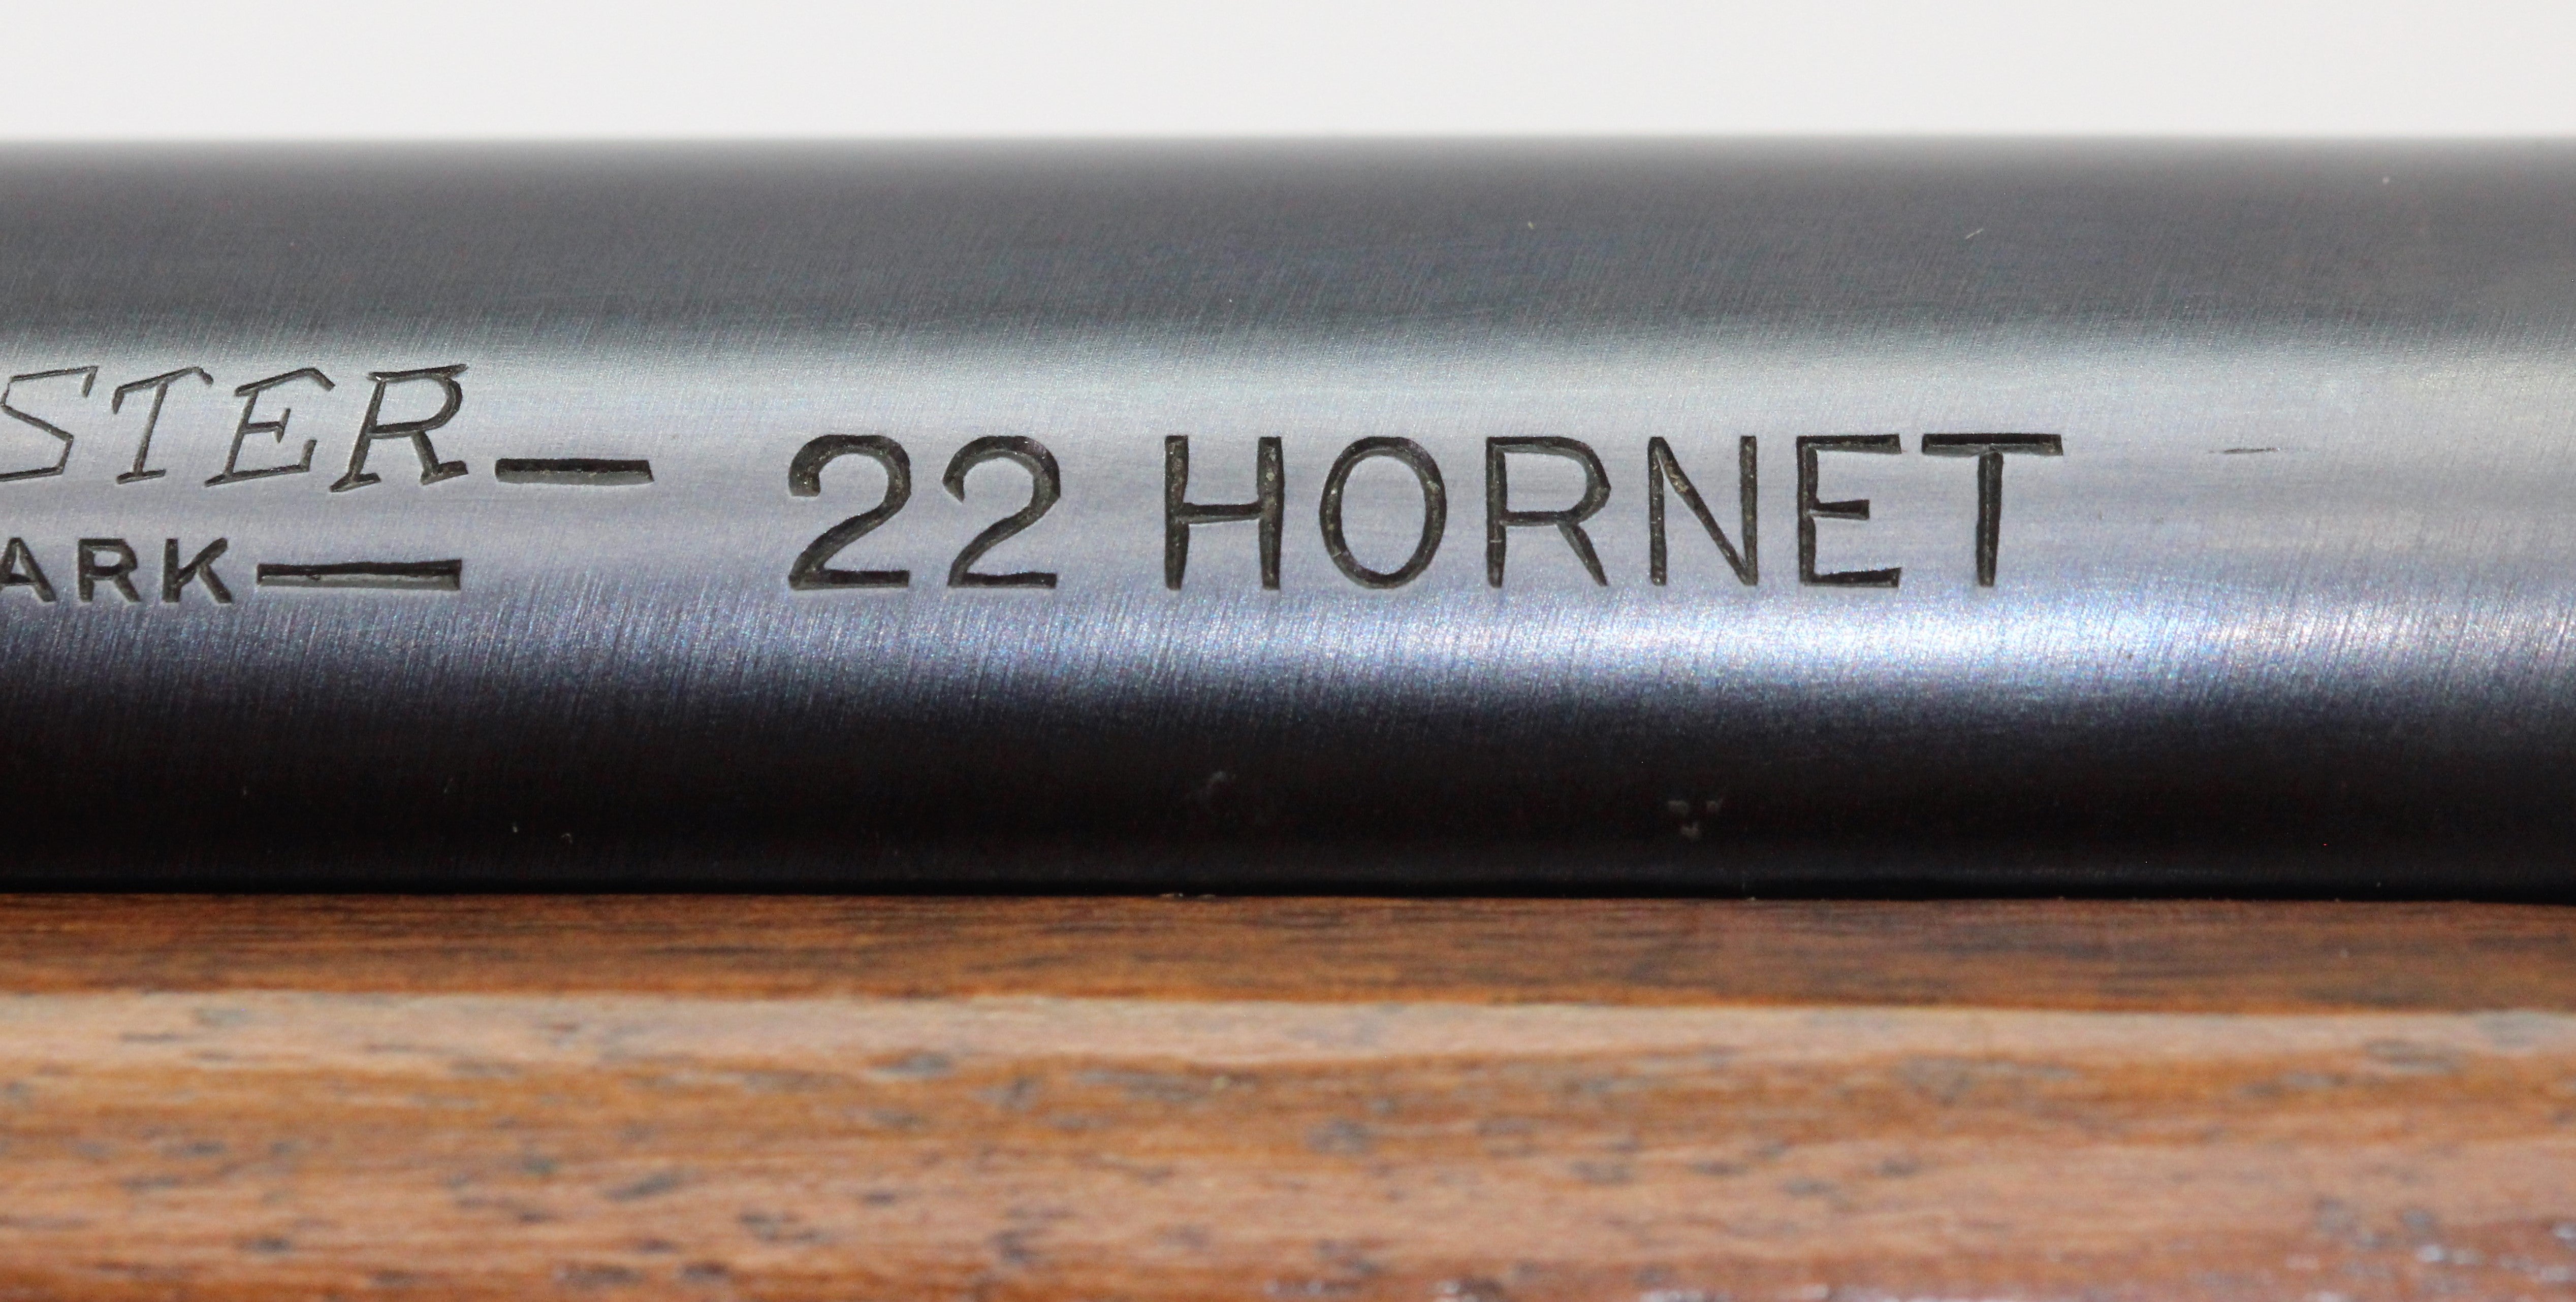 .22 Hornet Super Grade Rifle - 1942